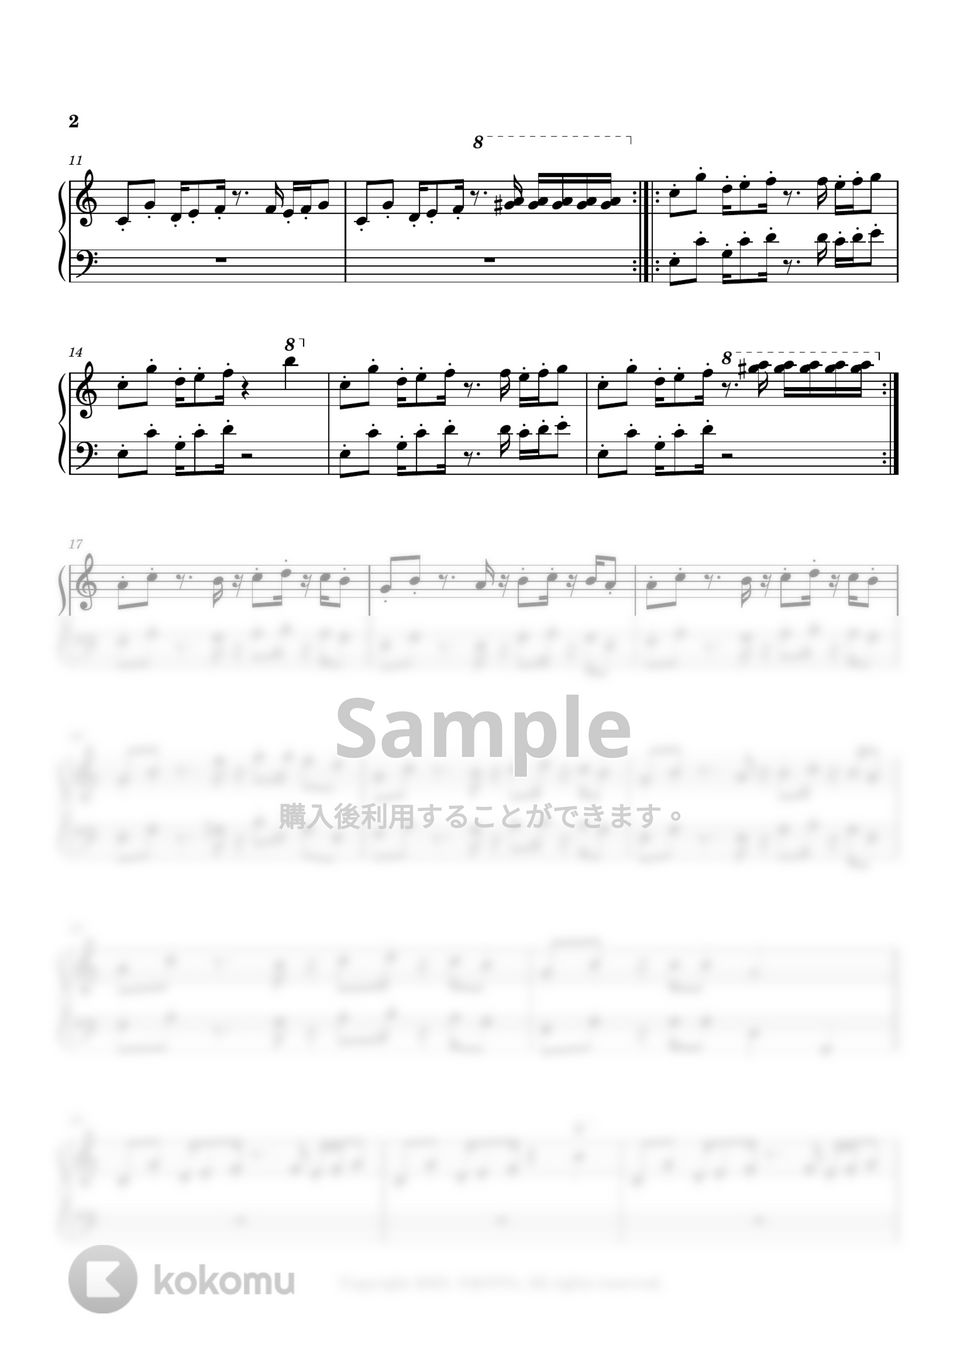 Seiji Kameda - 取り調べ (今夜、世界からこの恋が消えても track 5) by 今日ピアノ(Oneul Piano)